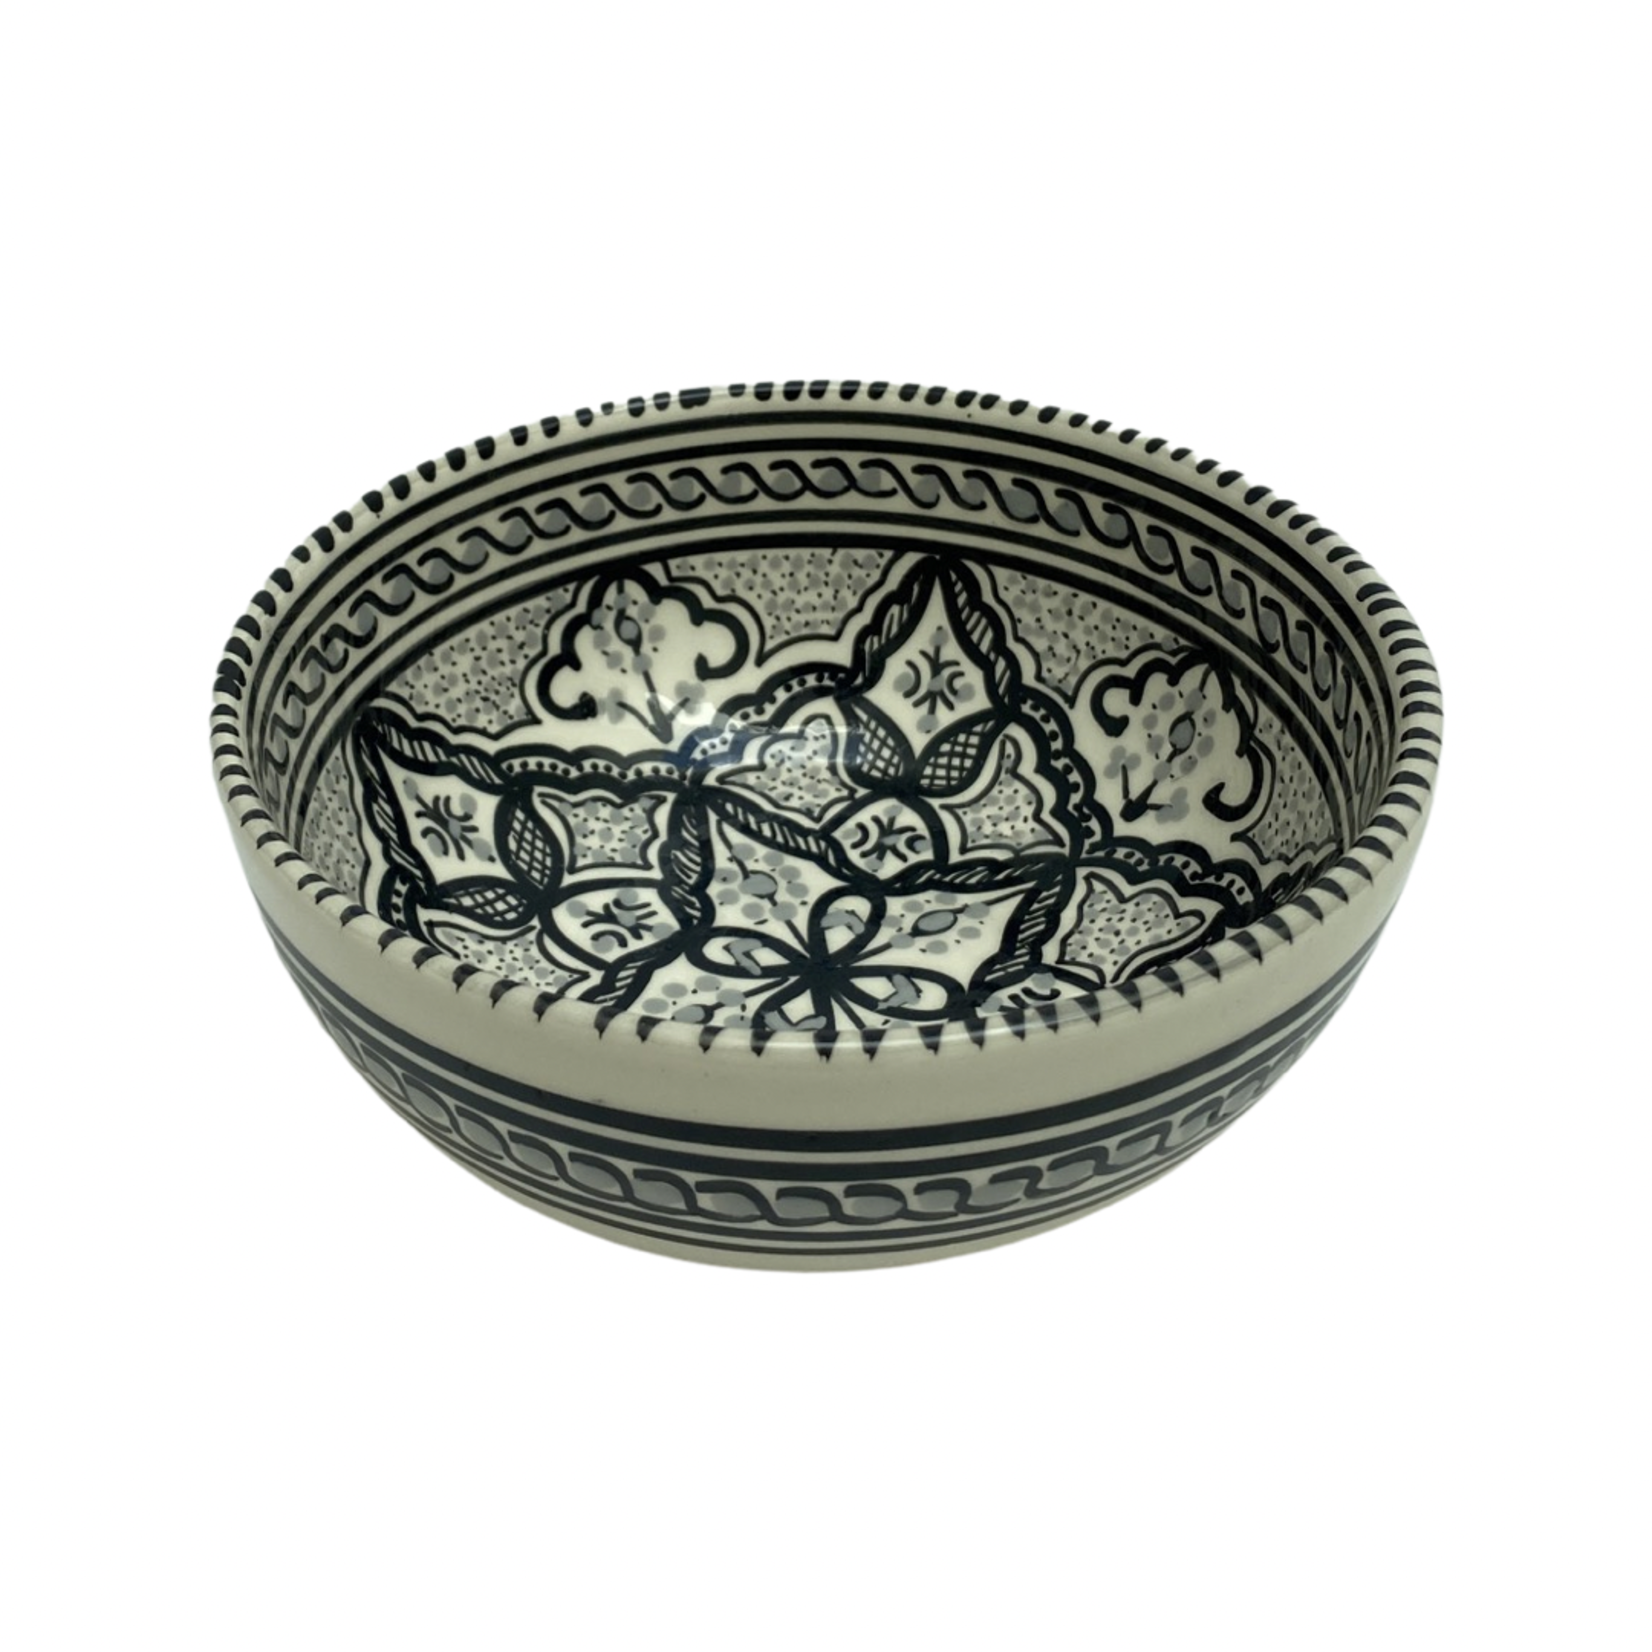 Purpers Choice Twinning handpainted bowl 15 cm  black pattern